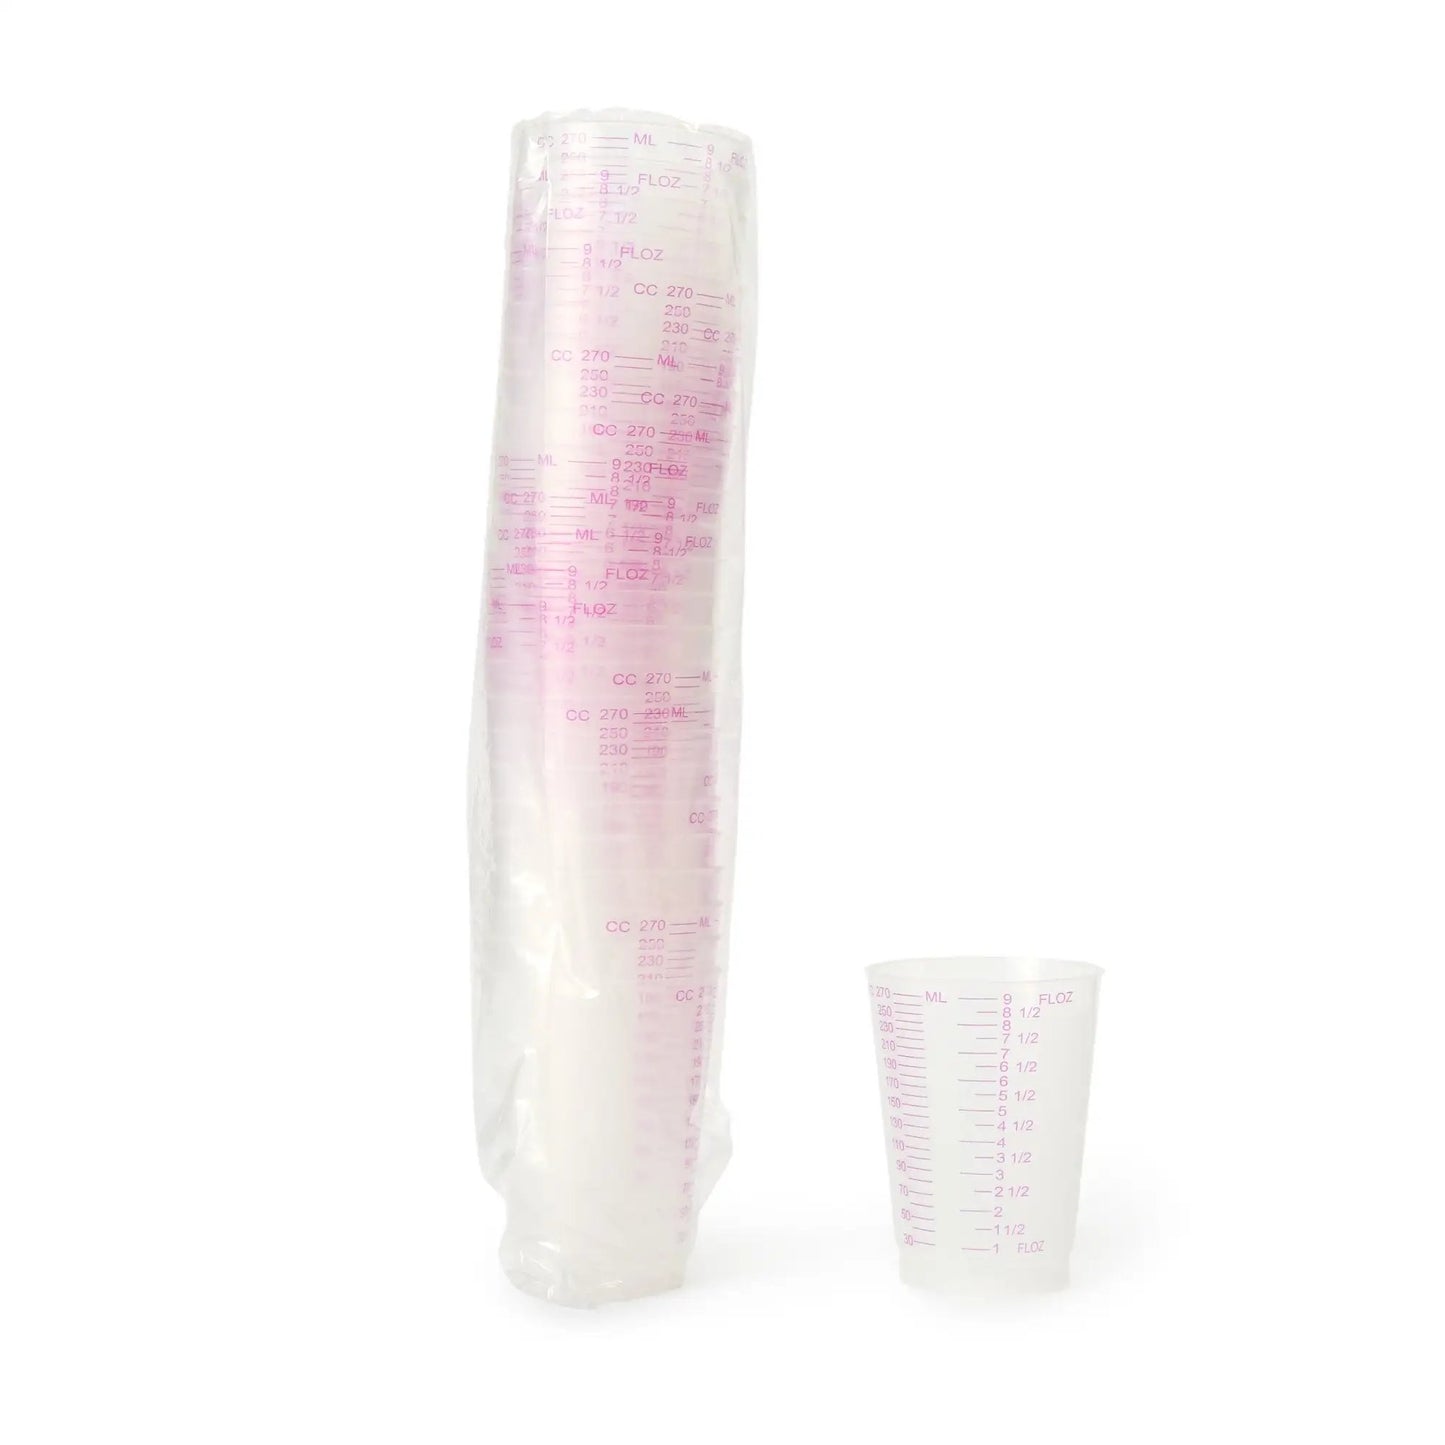 Graduated Drinking Cup Medegen 9 oz. Translucent Plastic Disposable